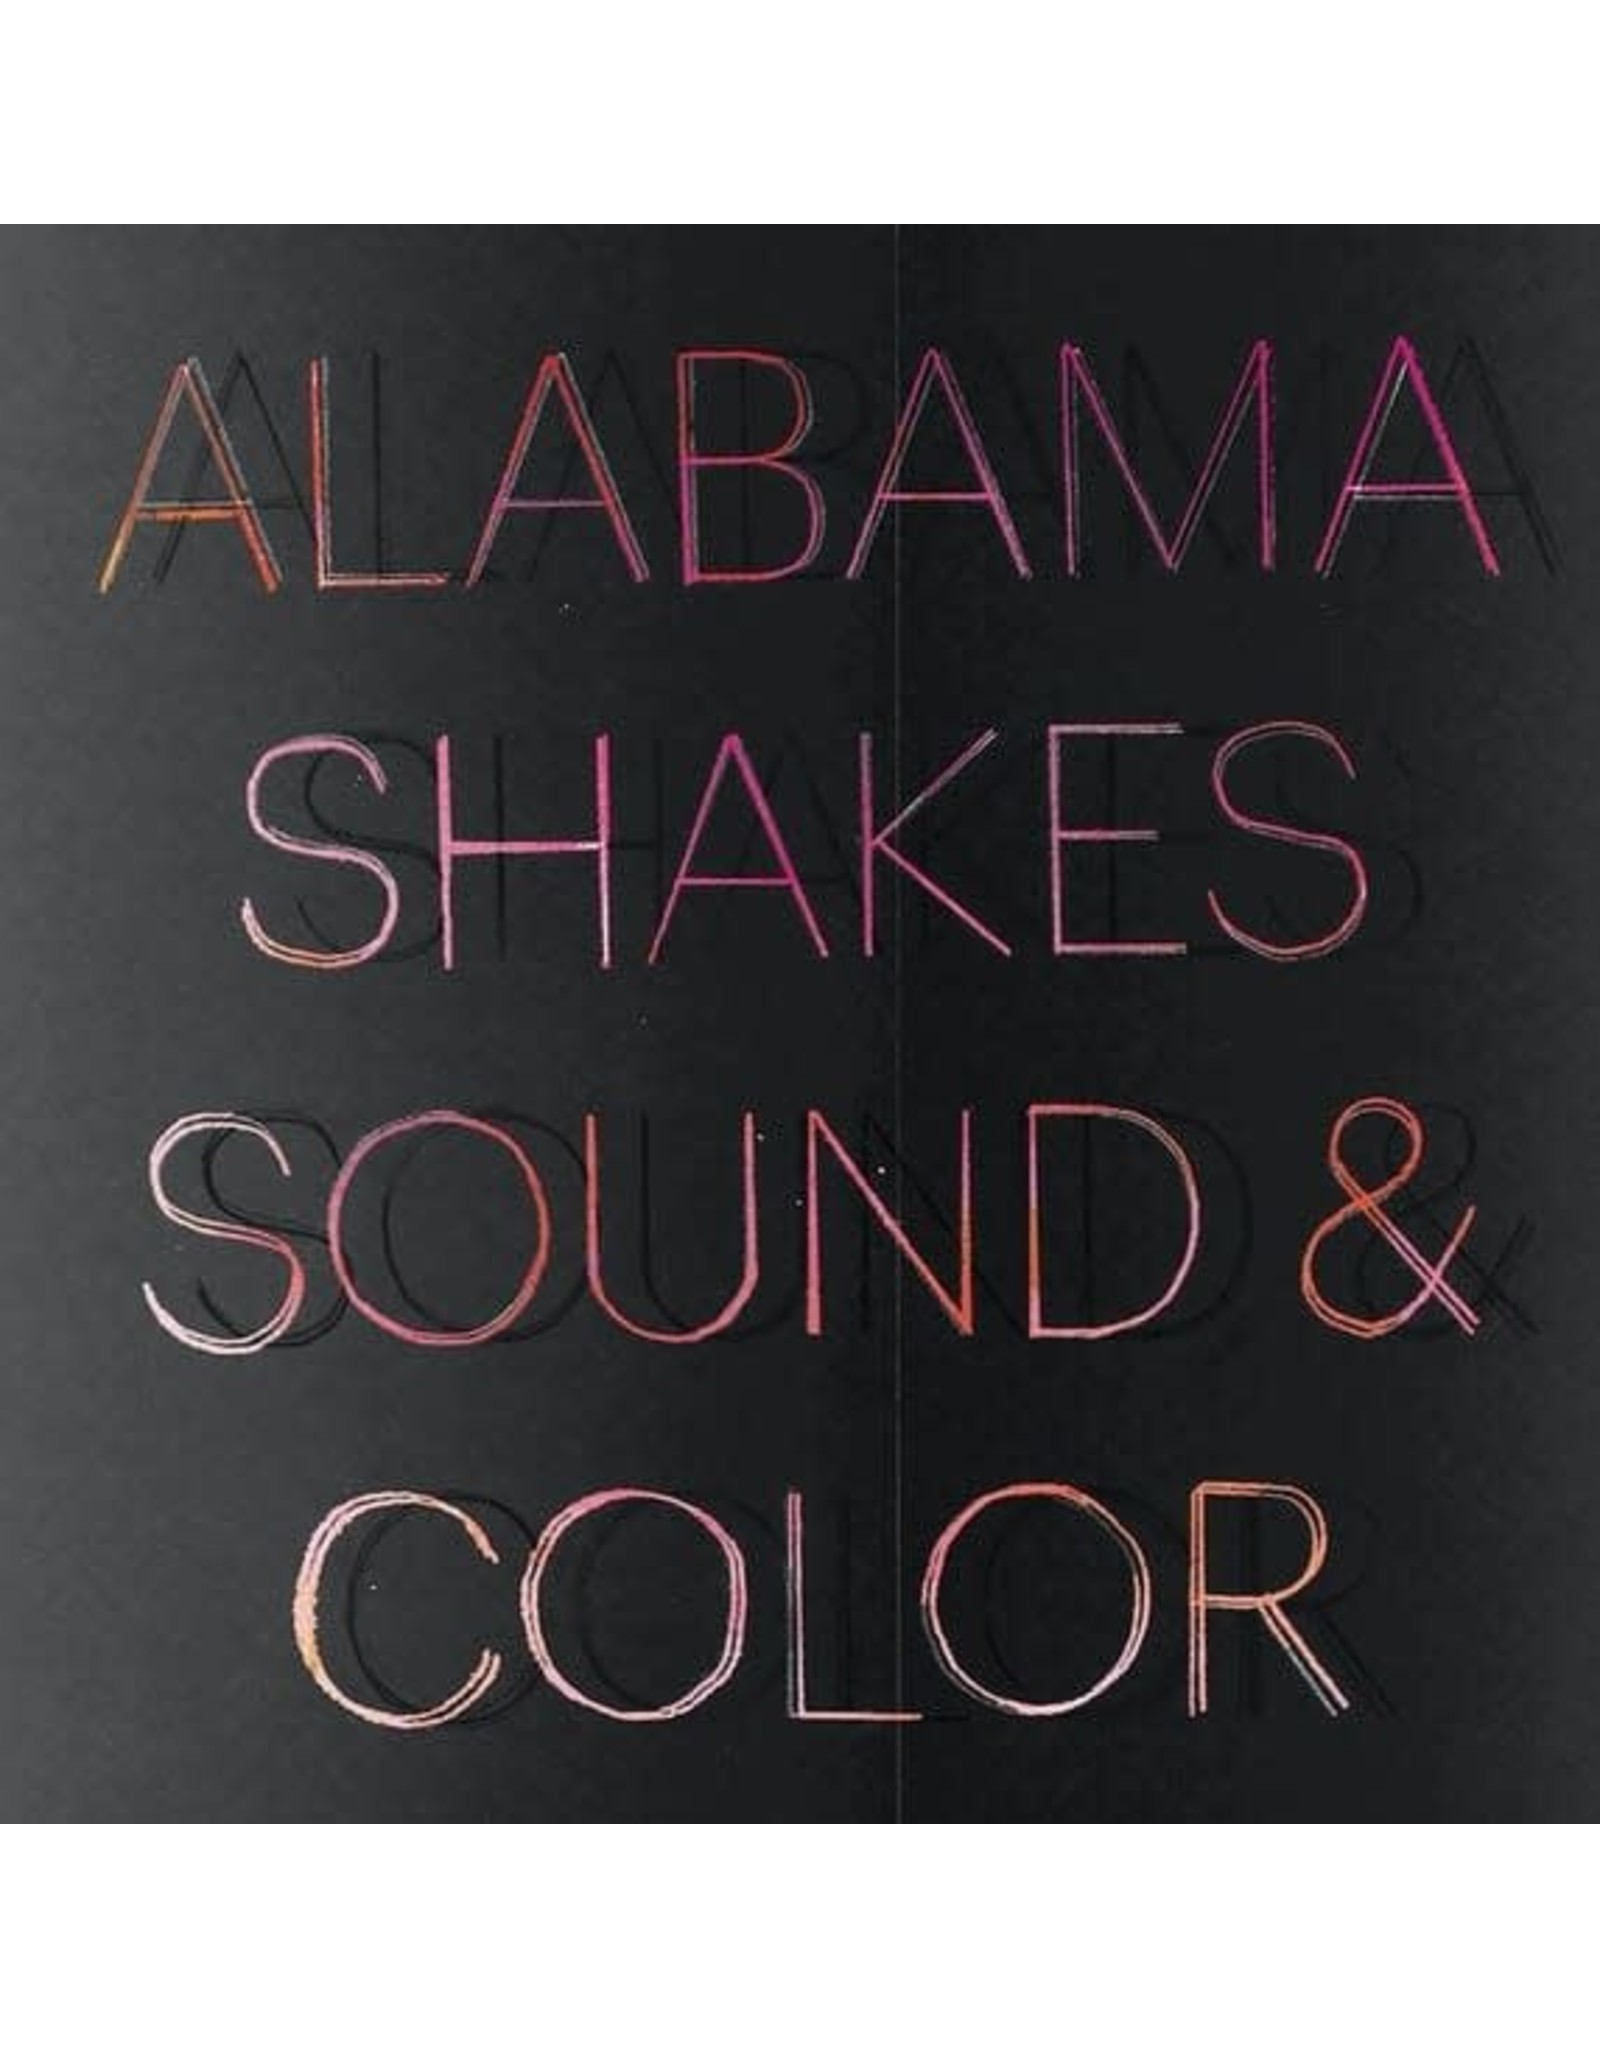 ATO Alabama Shakes: Sound & Color (Dlx) (2LP/bonus tracks) LP